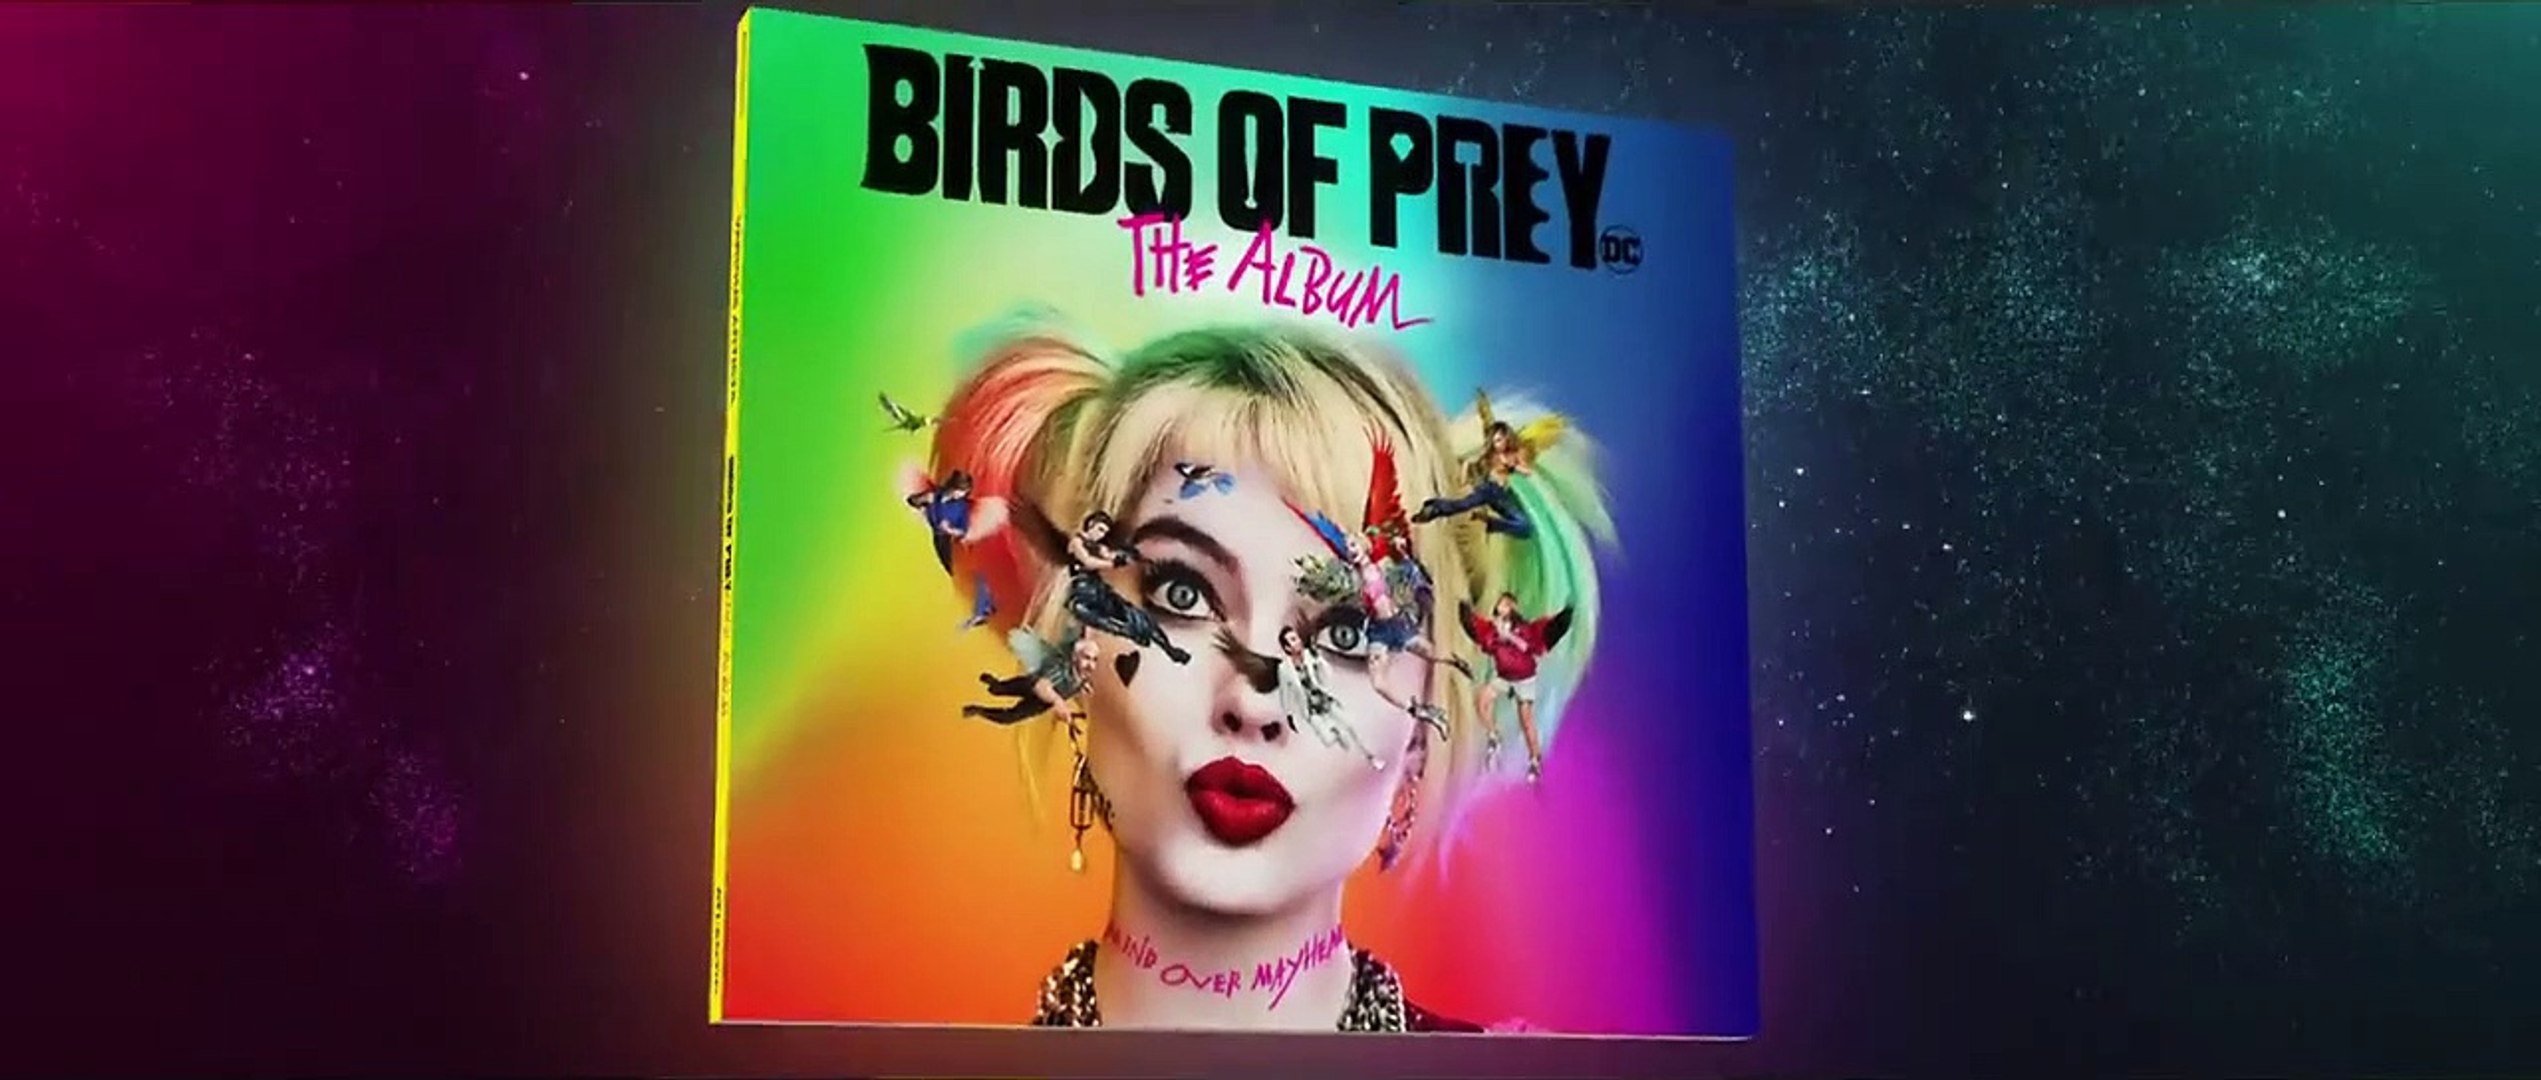 BIRDS OF PREY – Soundtrack Trailer 